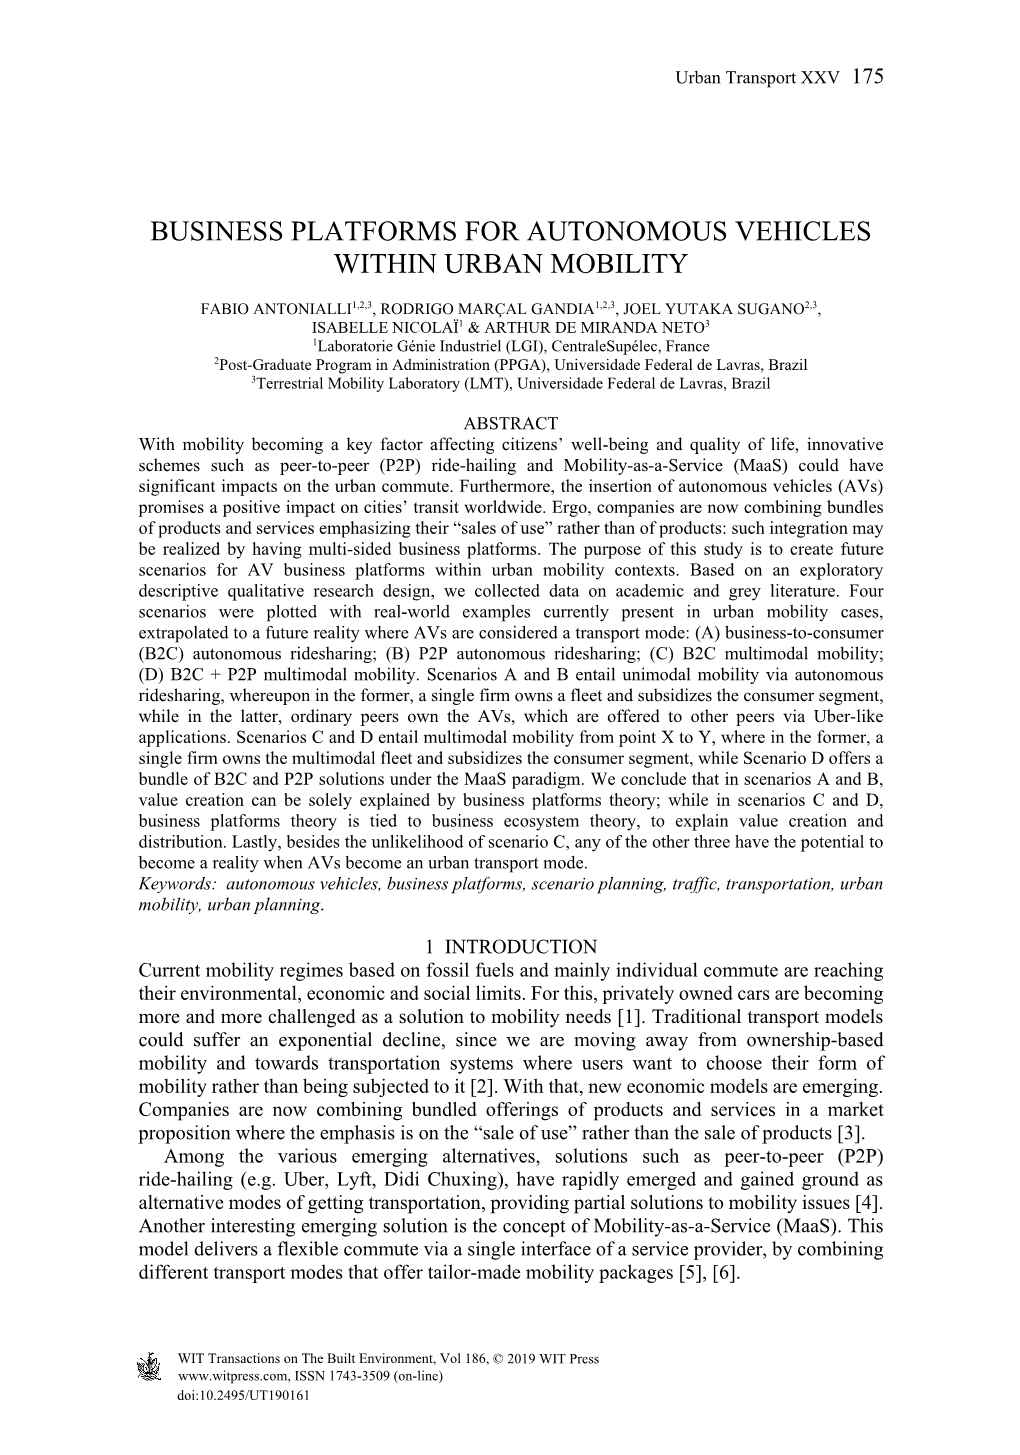 Business Platforms for Autonomous Vehicles Within Urban Mobility